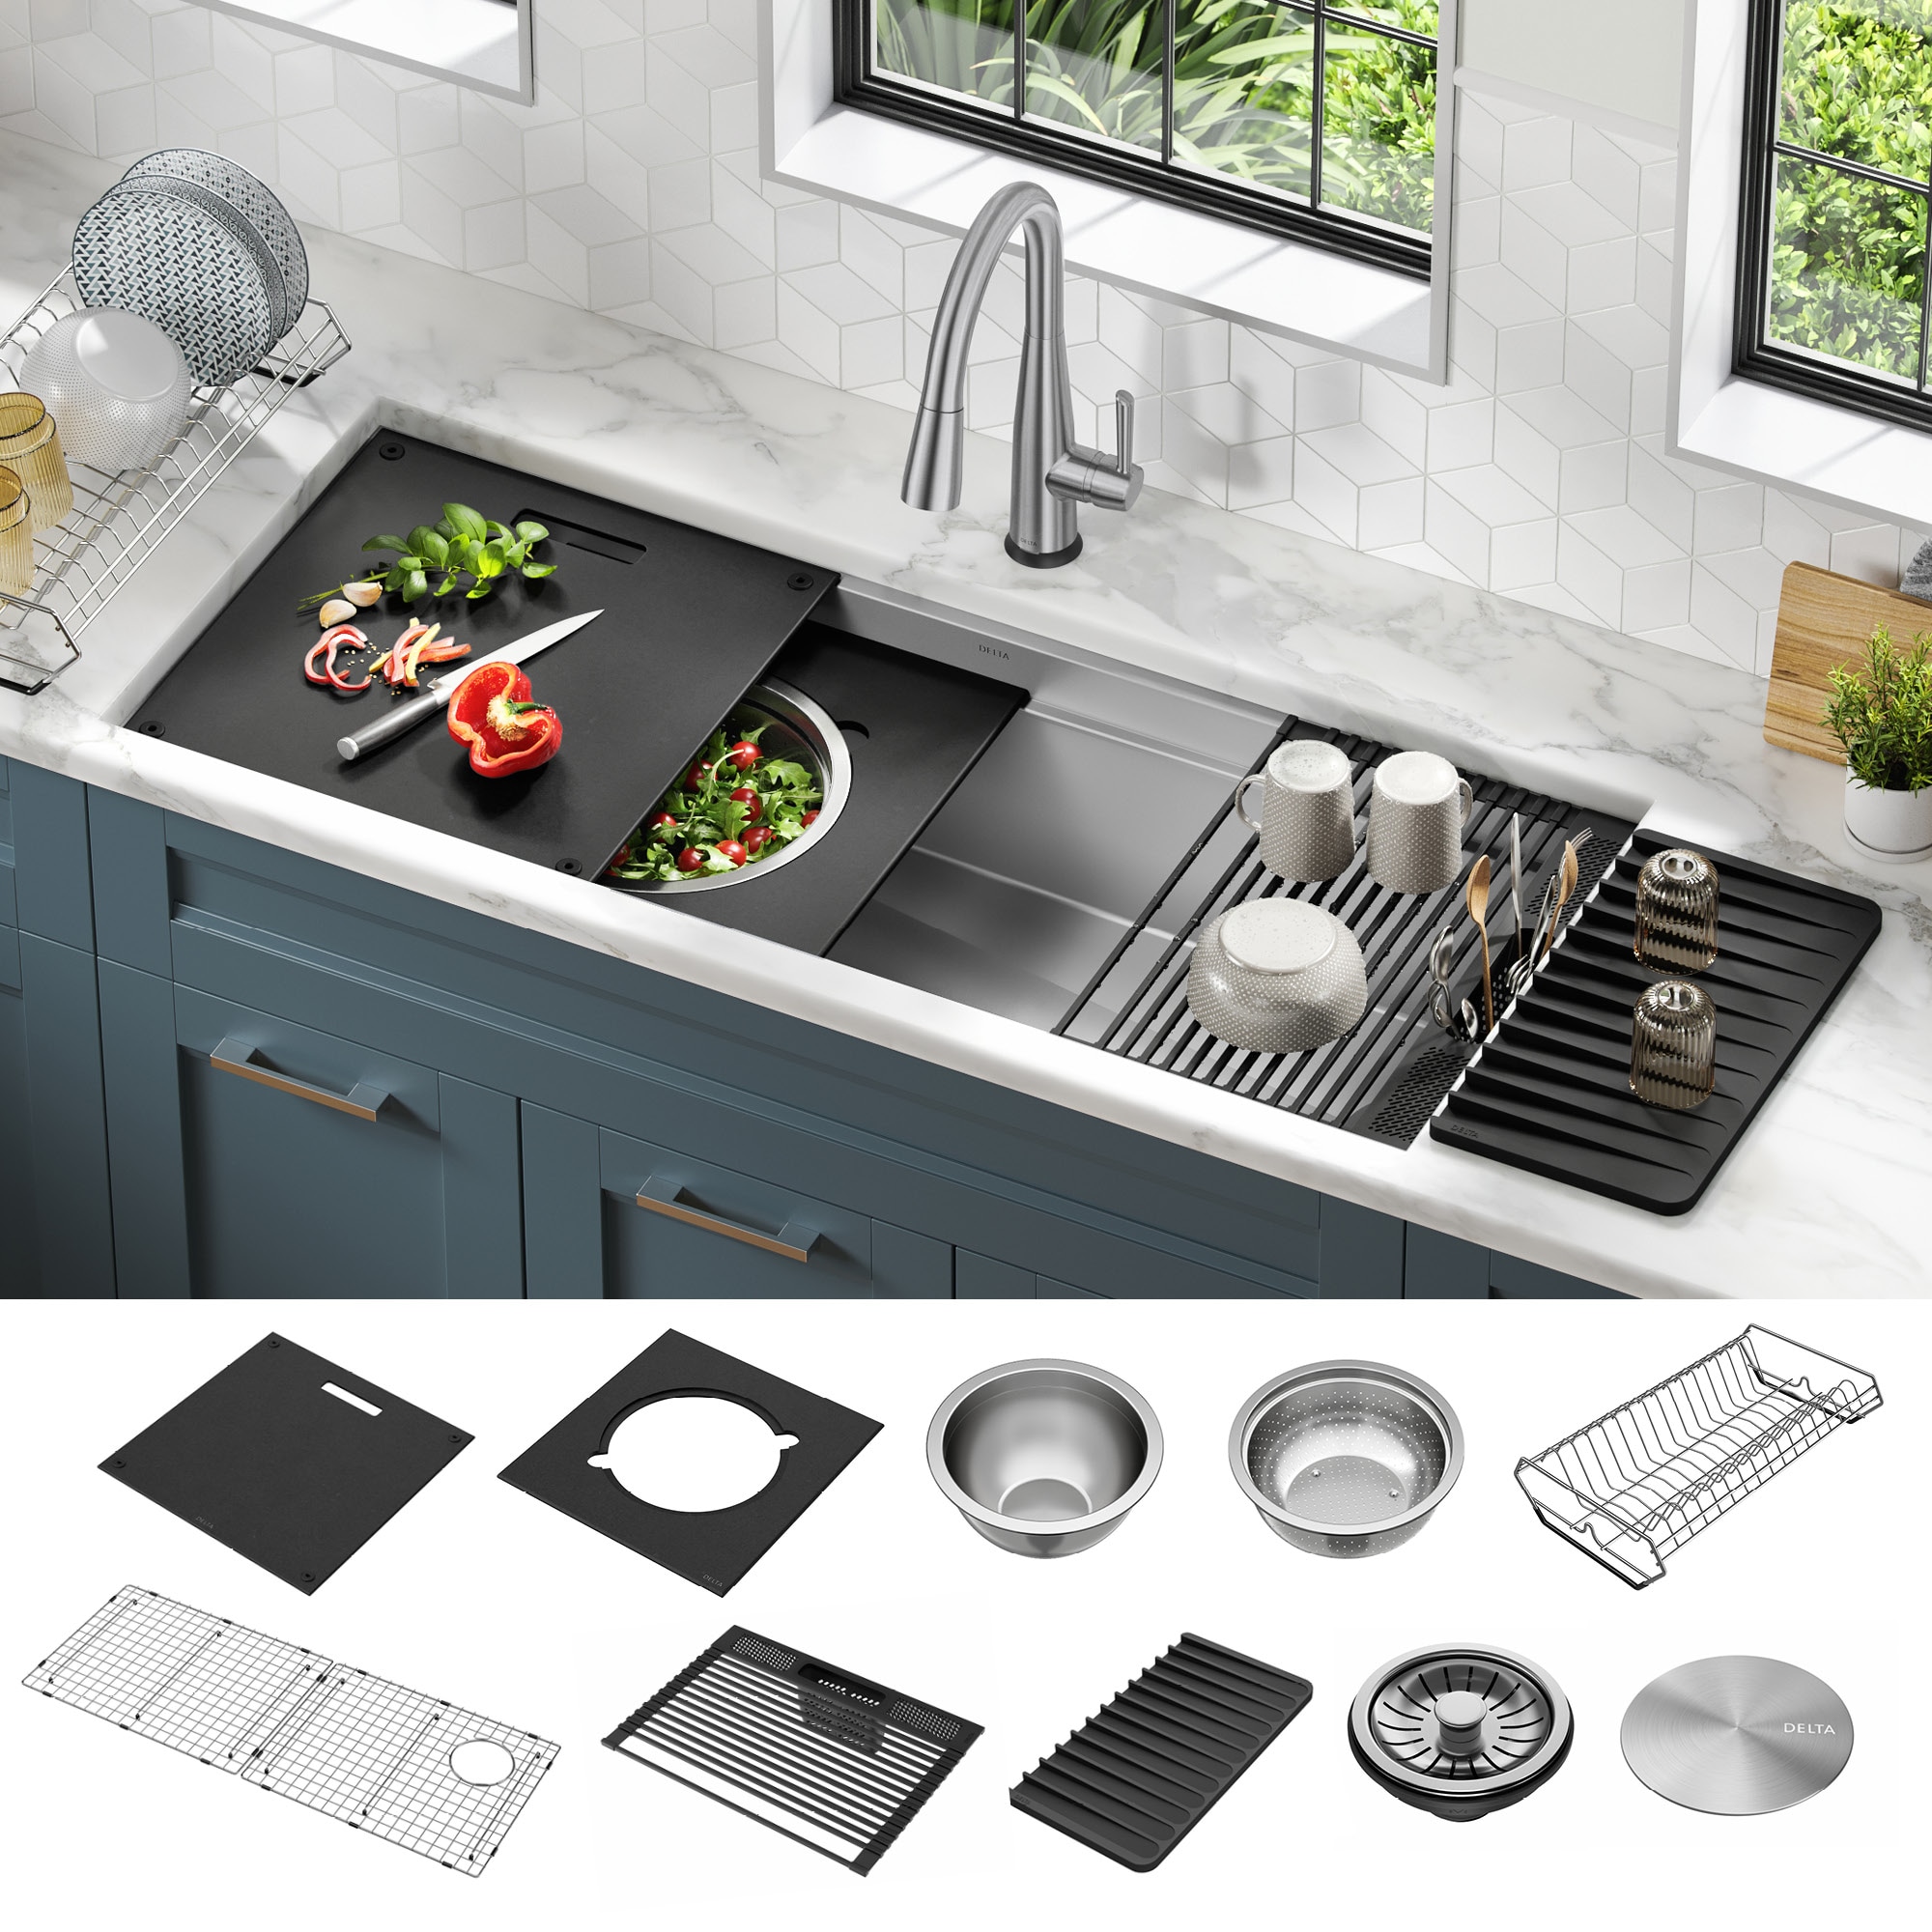 Delta Rivet 16 Gauge Stainless Steel 30 in. Single Bowl Undermount Workstation Kitchen Sink with Accessories, Silver